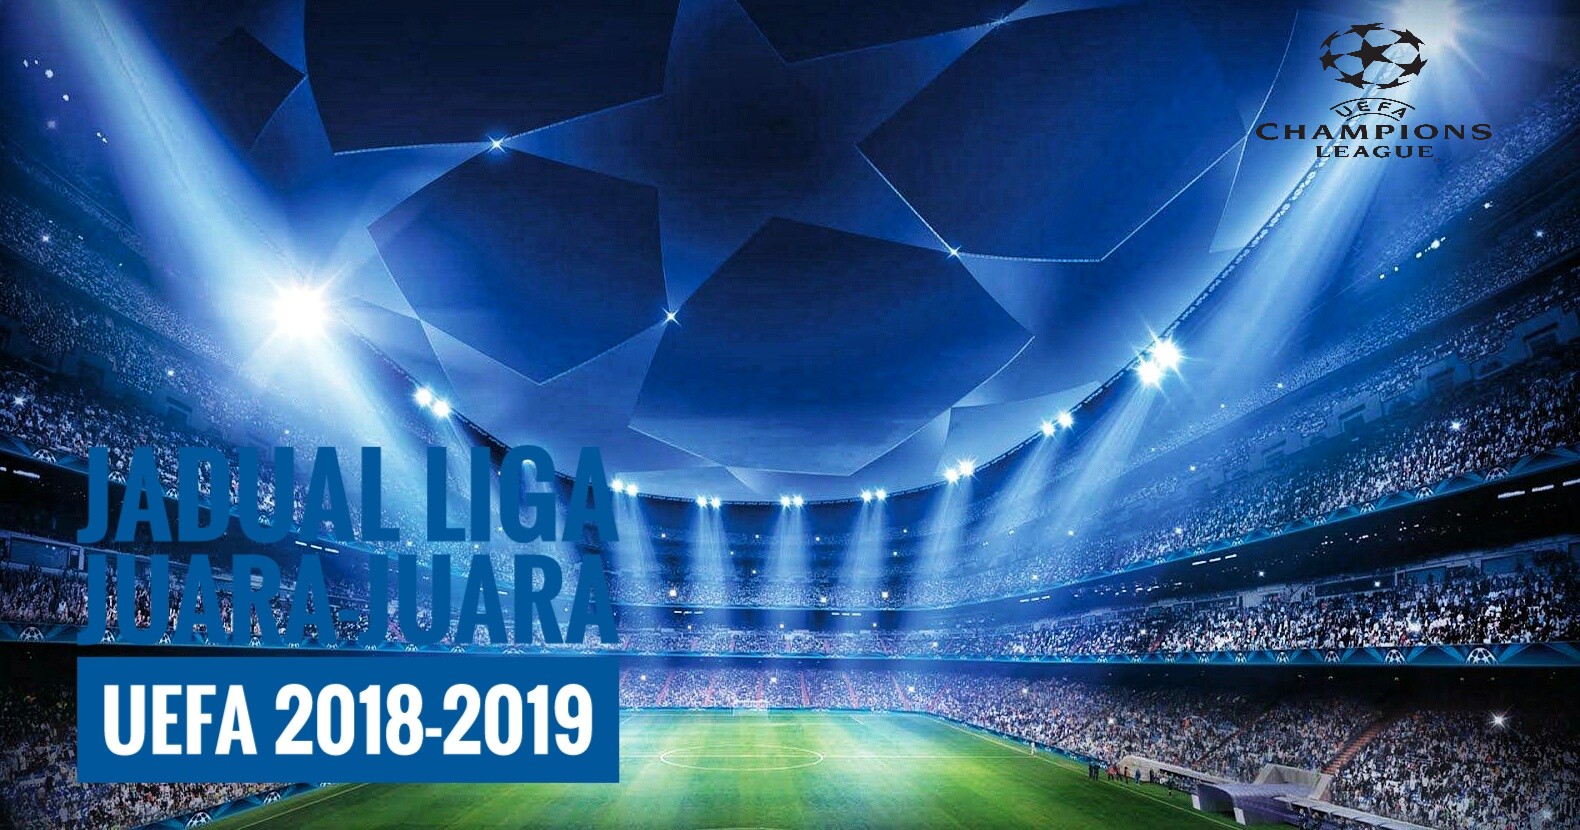 jadual champions league 2019